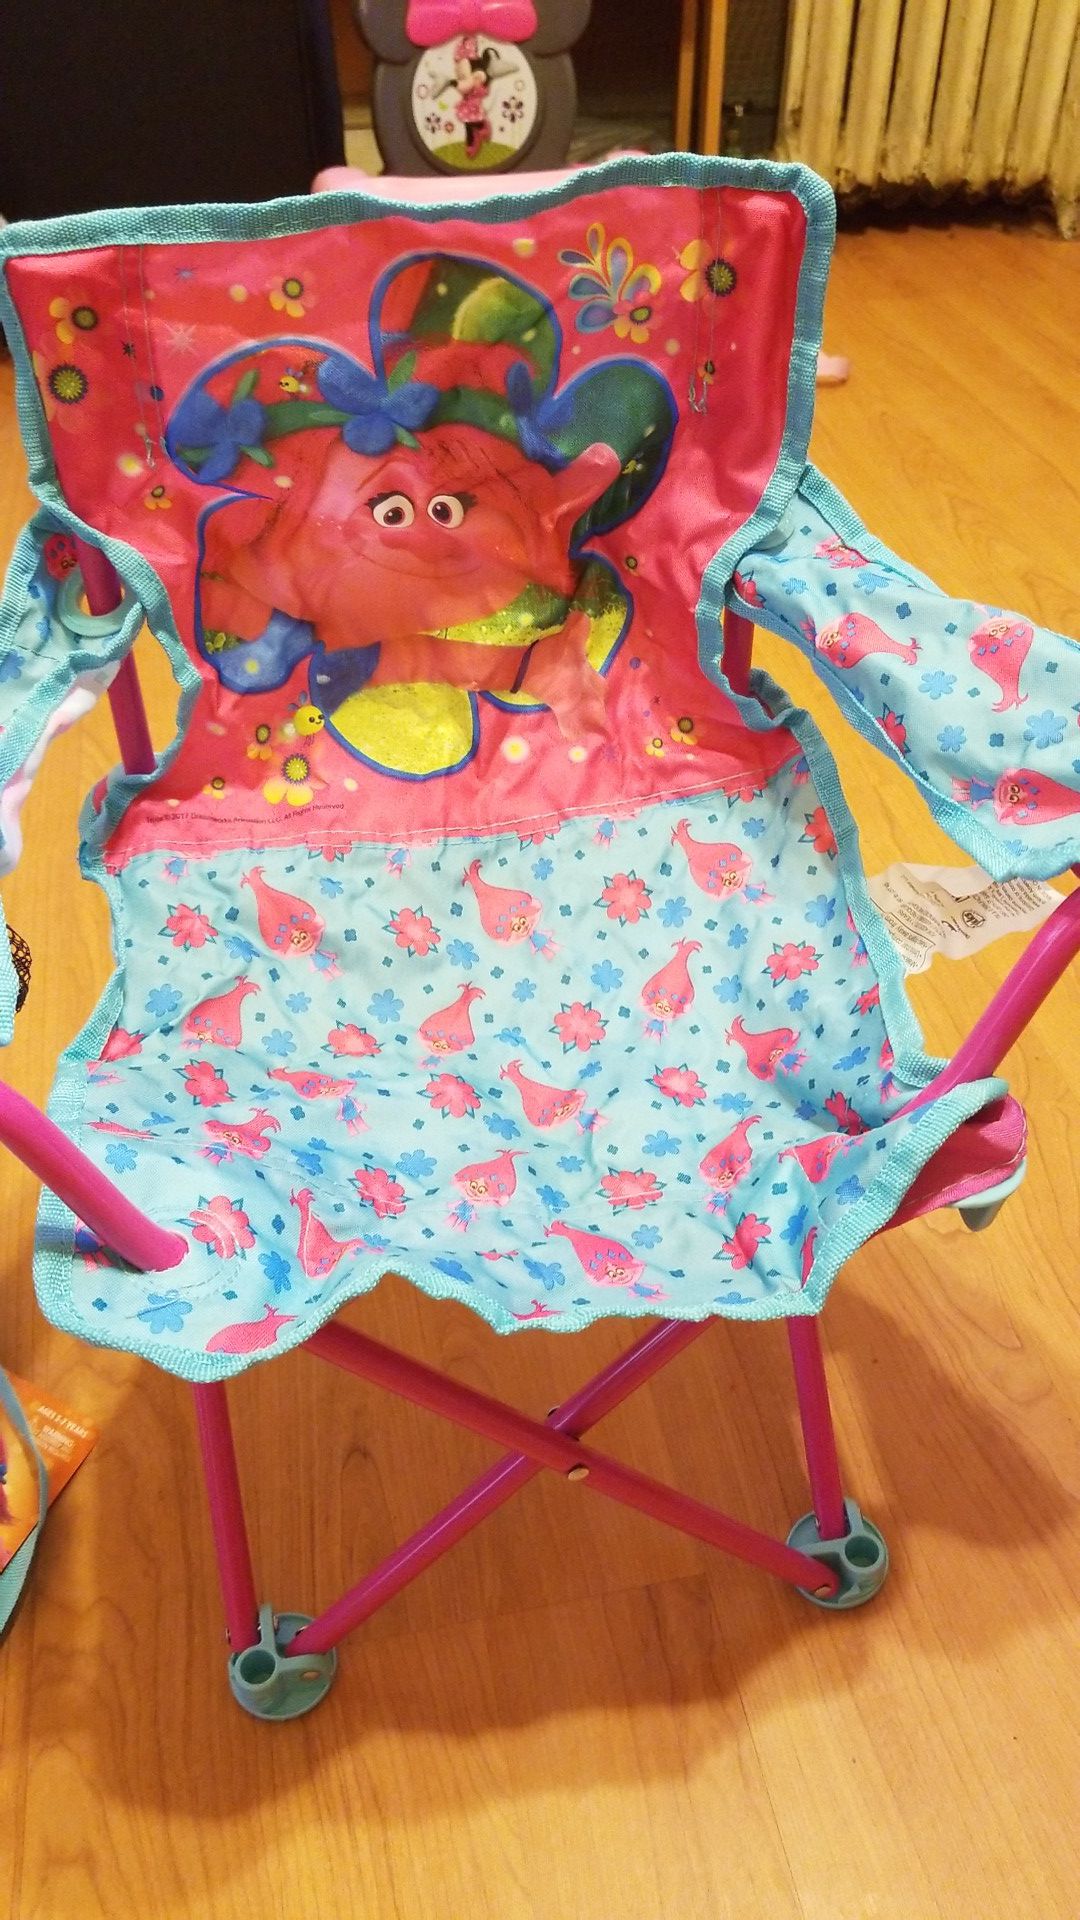 Trolls toddler chair